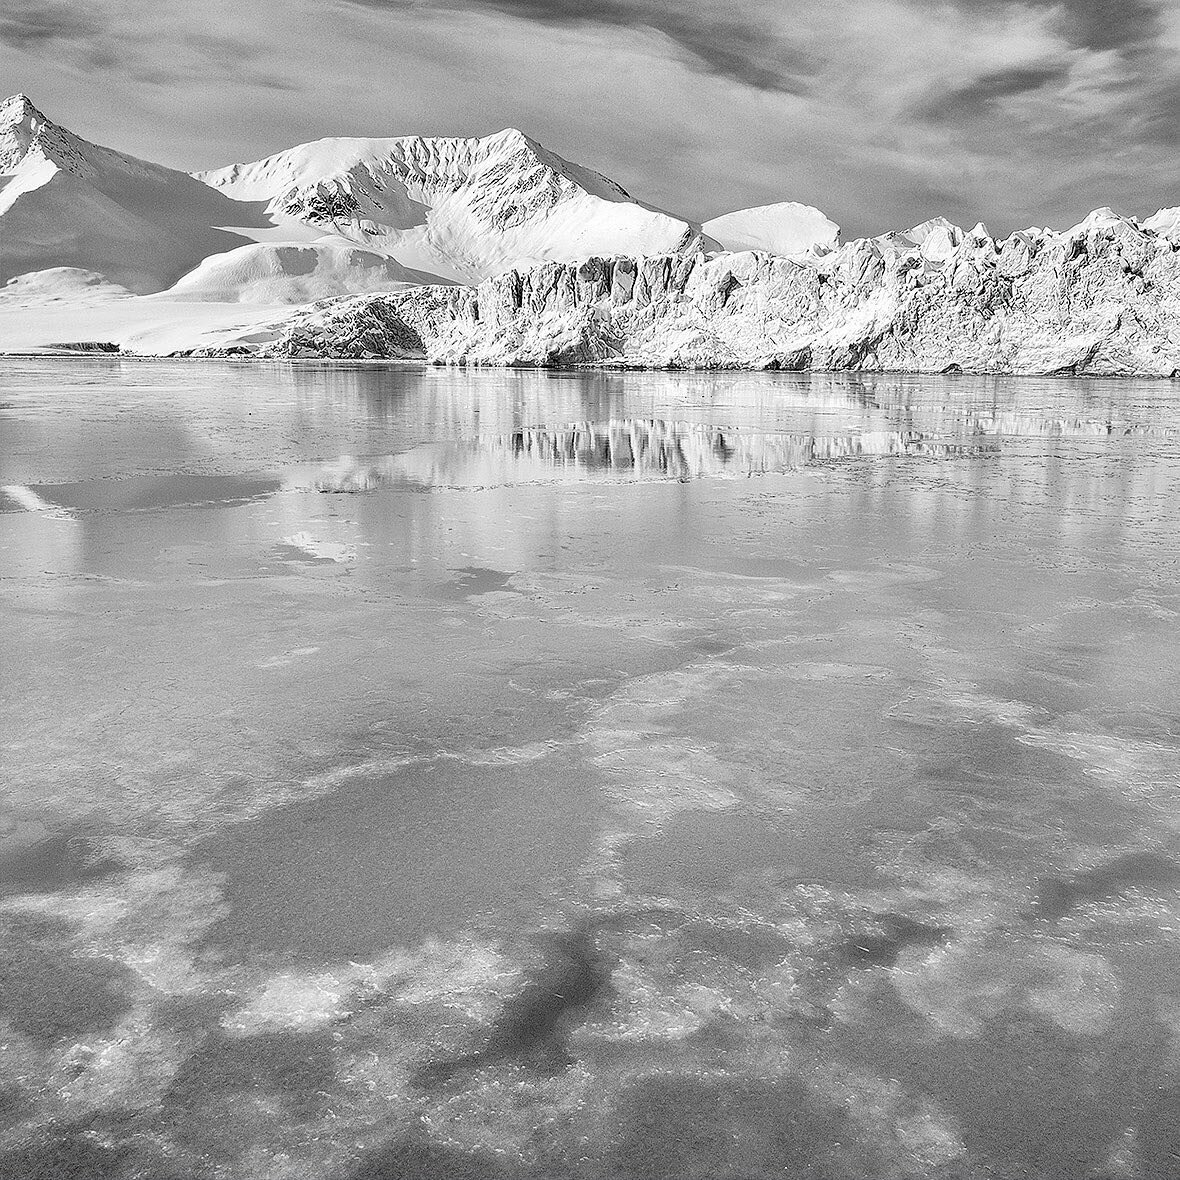 REFLECTIVE GLACIER ⁠⁠
⁠⁠
#Glacier #Spitsbergen #Svalbard #Longyearbyen #Arctic #Norway⁠⁠
#icelandcape #ice  #meltingice #icemelt #glaciermelt #blacknwhite #monochromatic #fineartphotographer #fujifilm #X-T3⁠⁠